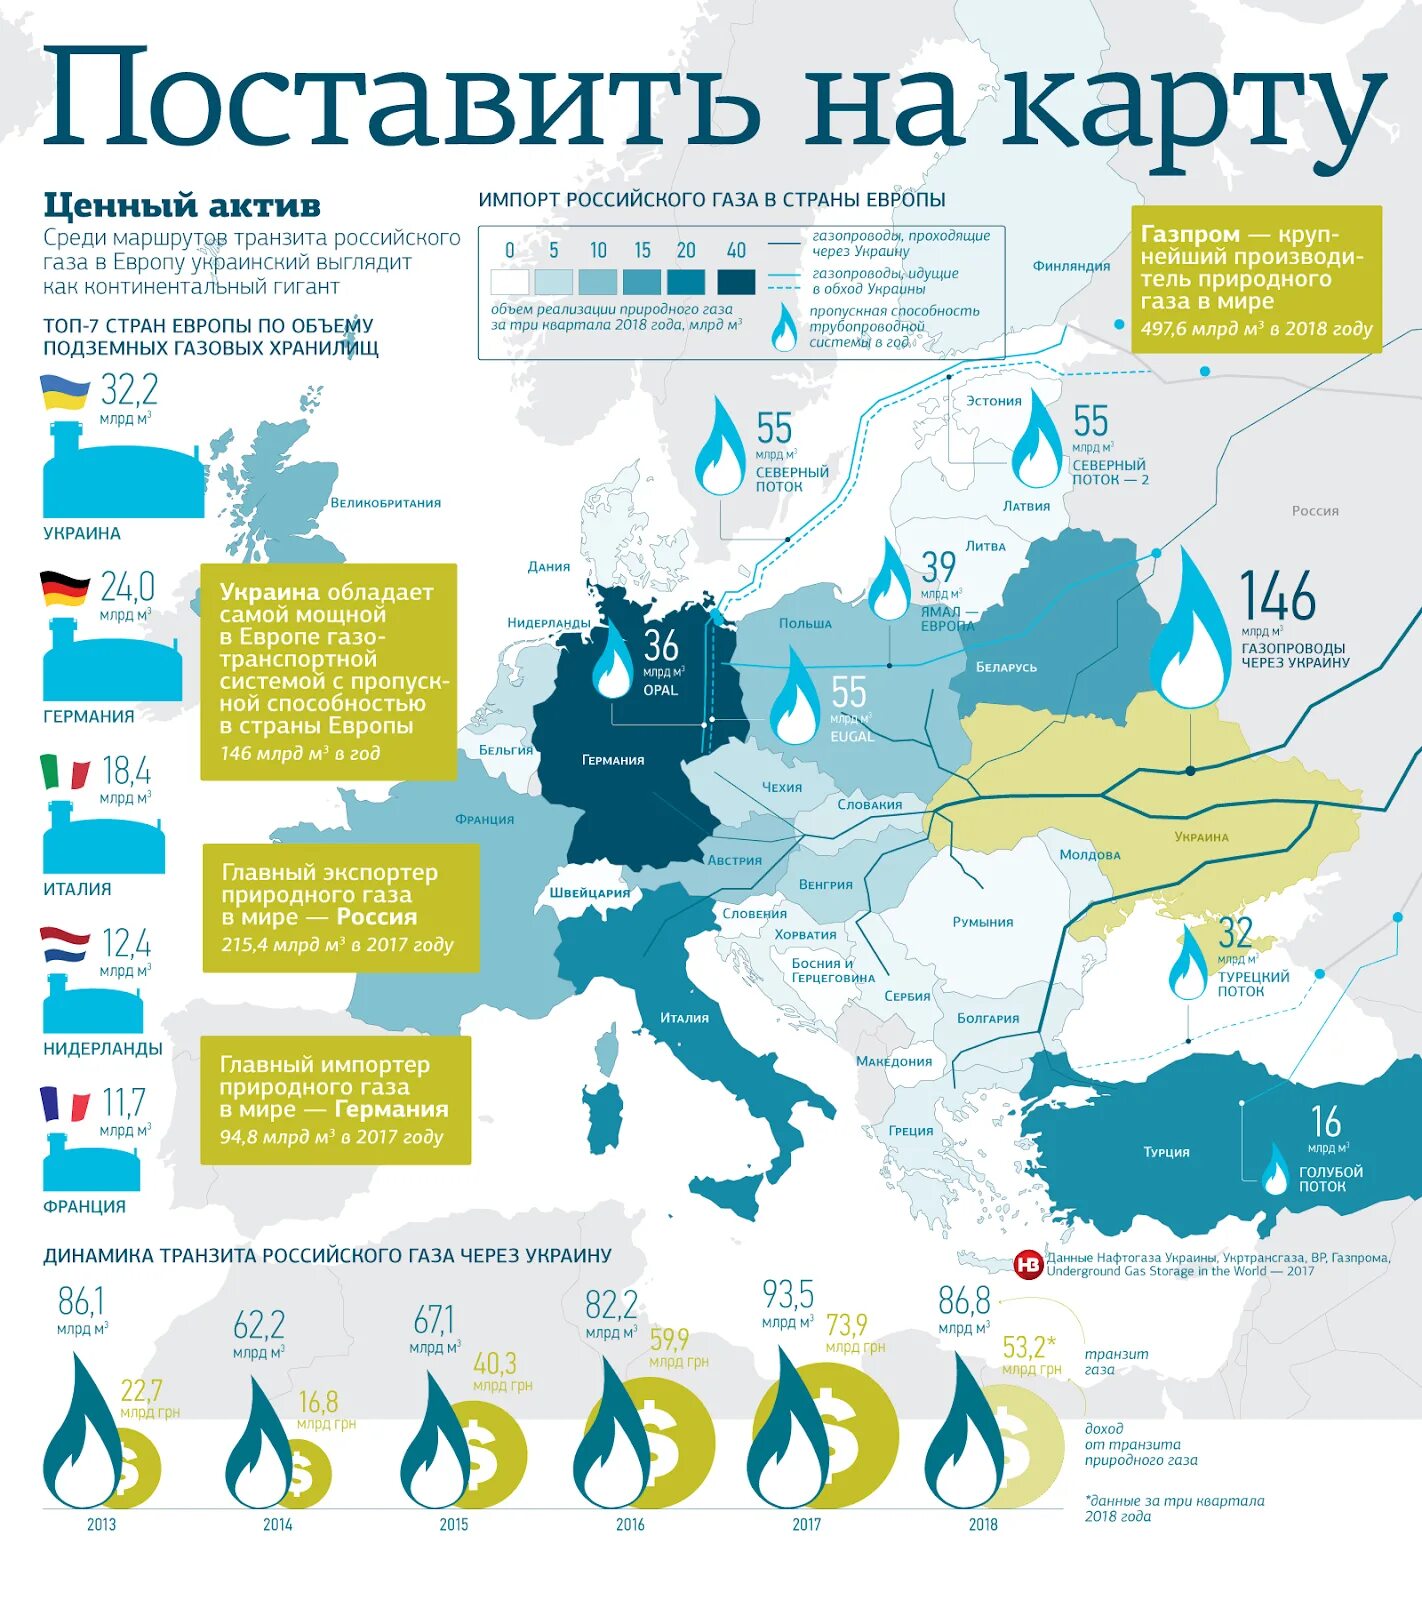 ГАЗ В Европу на карте. Поставки газа в Европу через Украину. Транзит газа через Украину. ГАЗ из России в Европу через Украину.